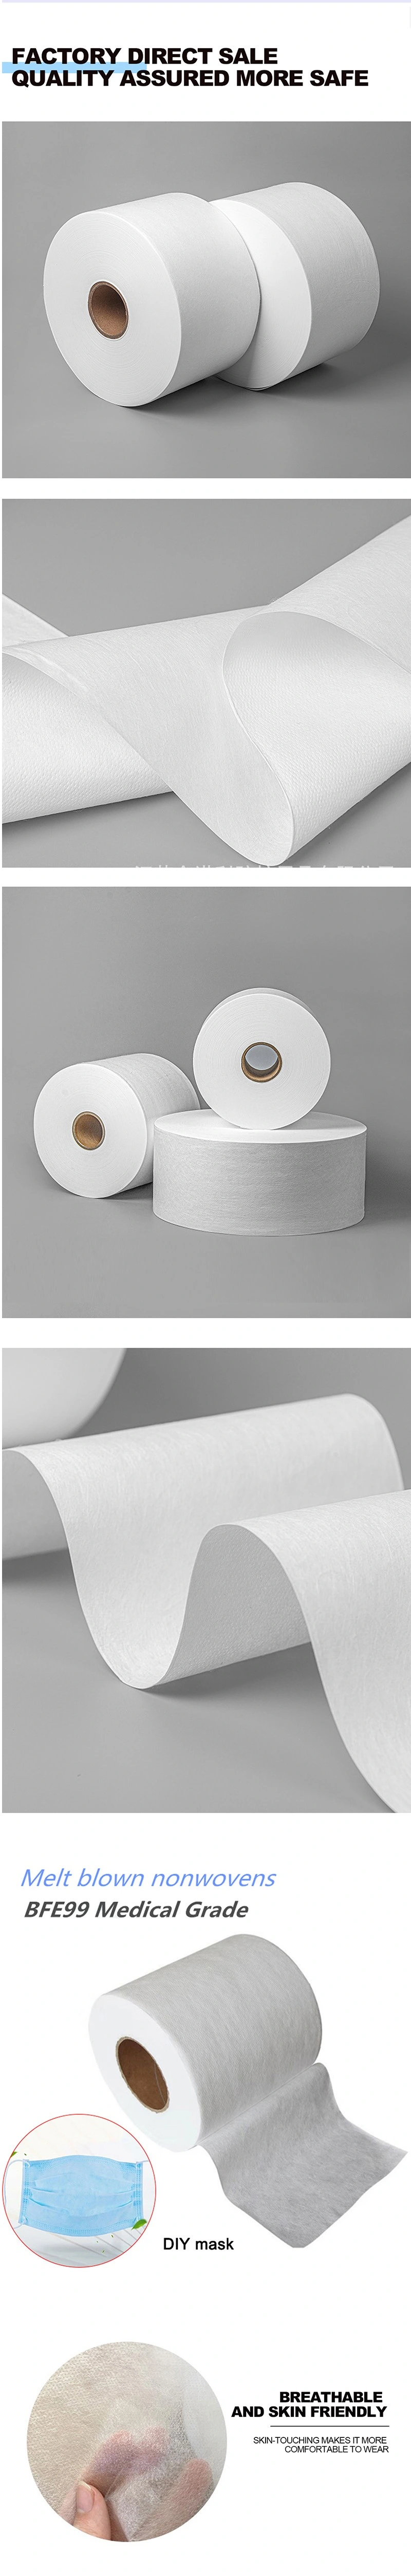 Factory Direct Meltblown Nonwoven Fabric 100% Polypropylene Material Air Filter